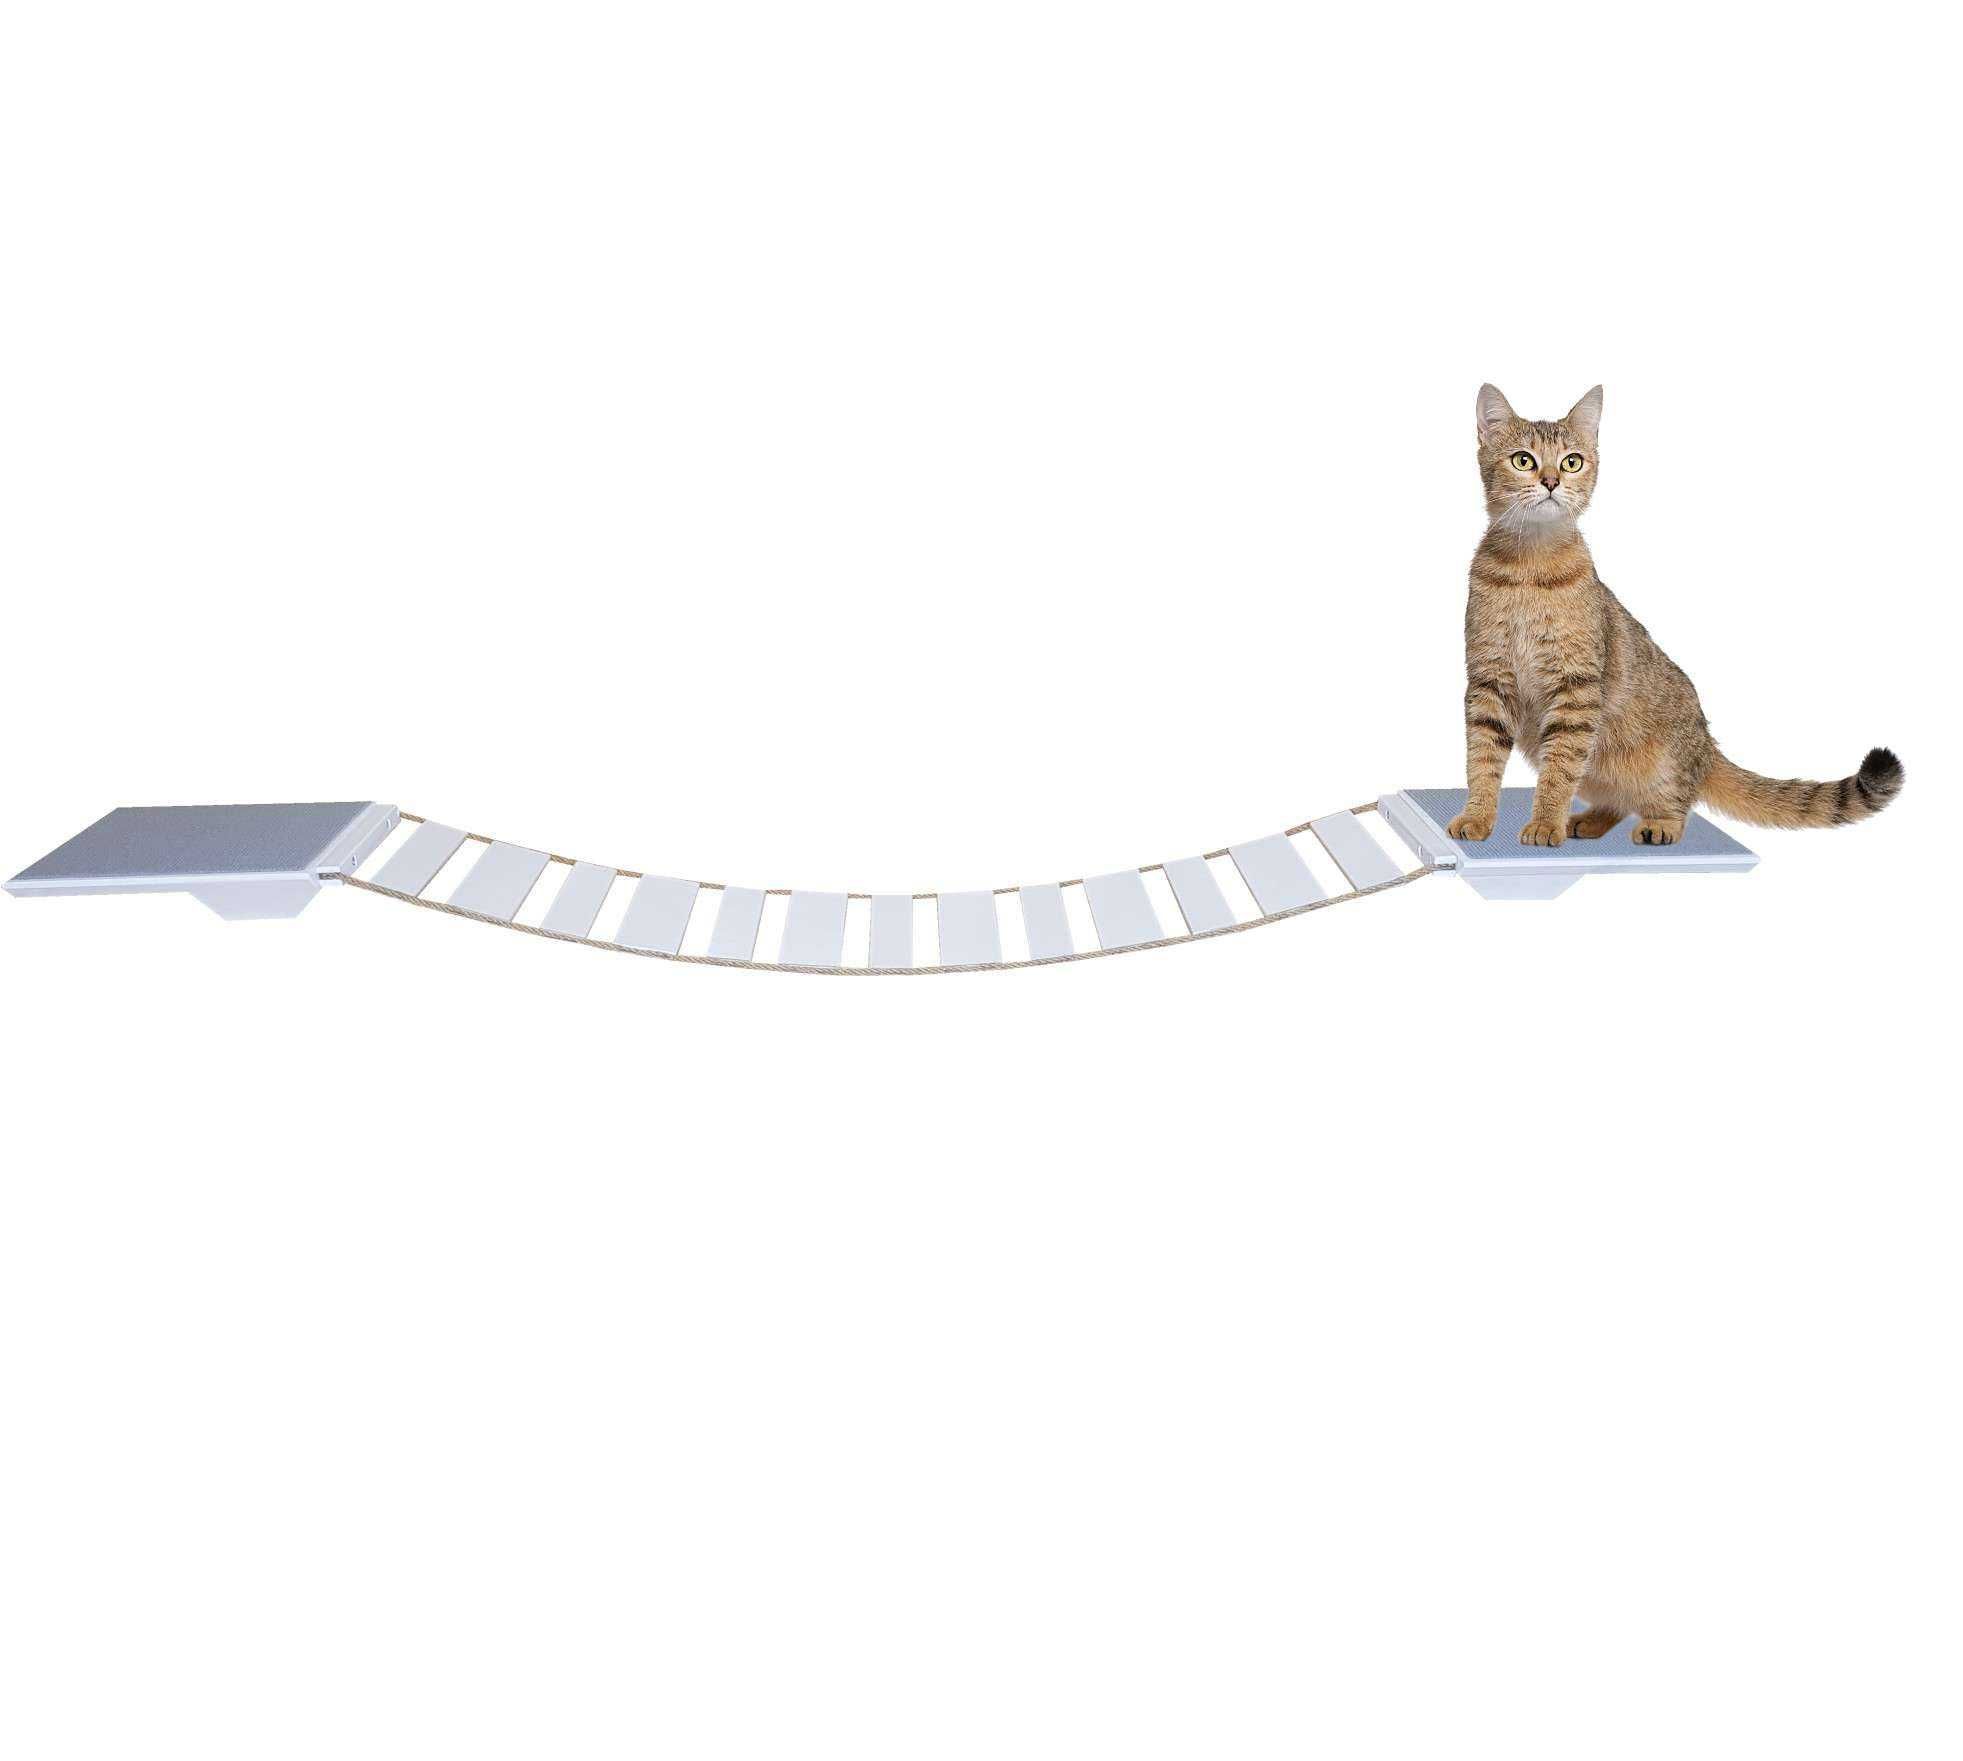 Mostek Lux dla kota kładka półka półki schodek drabinka